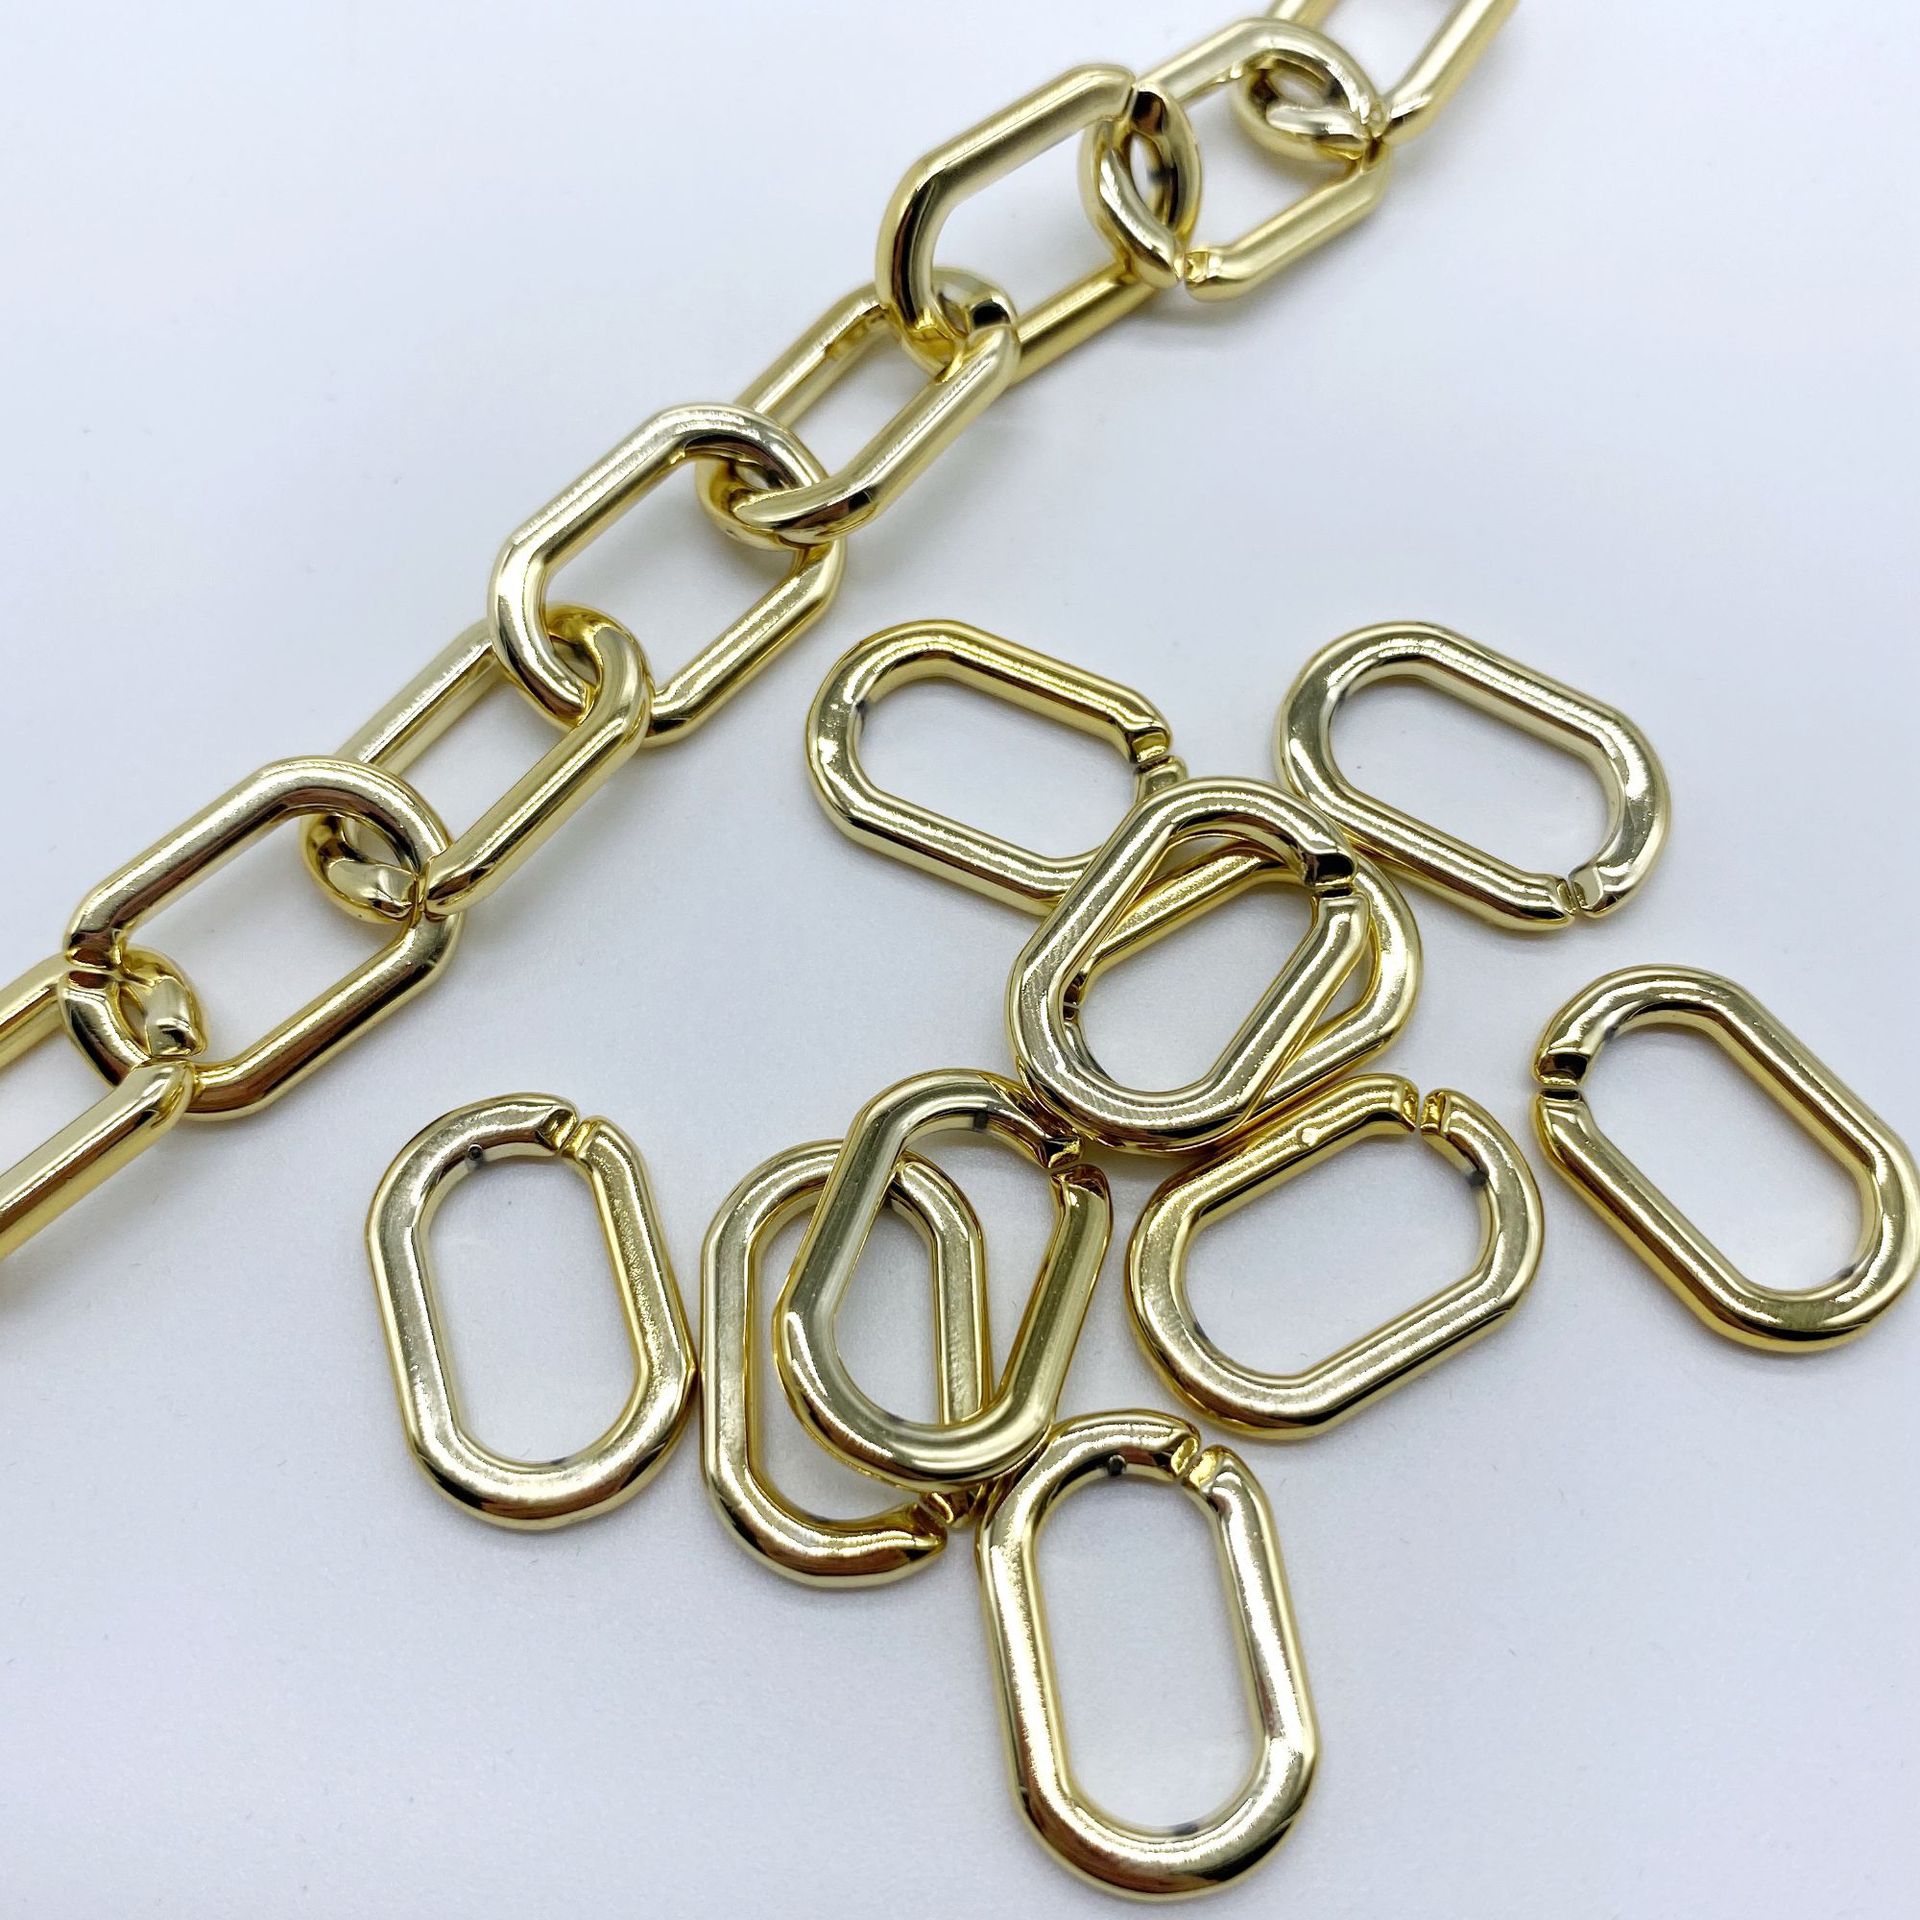 5:kc gold chain (20x19mm)